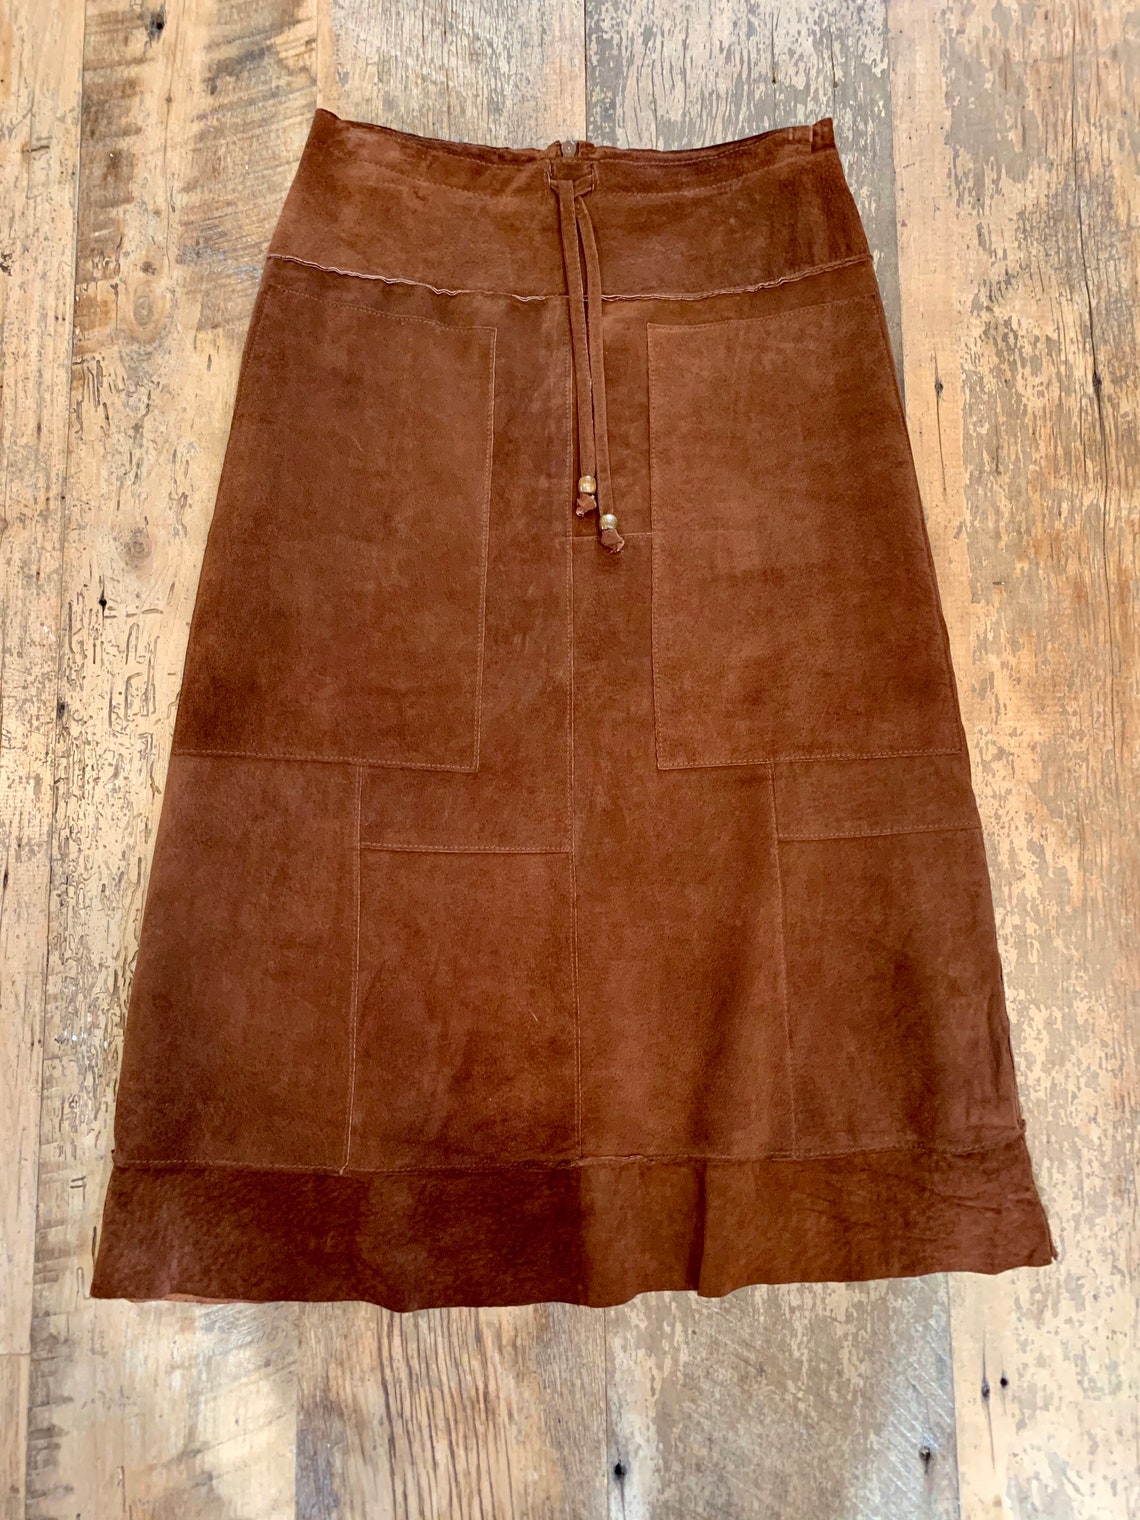 Brown Suede Skirt | Etsy